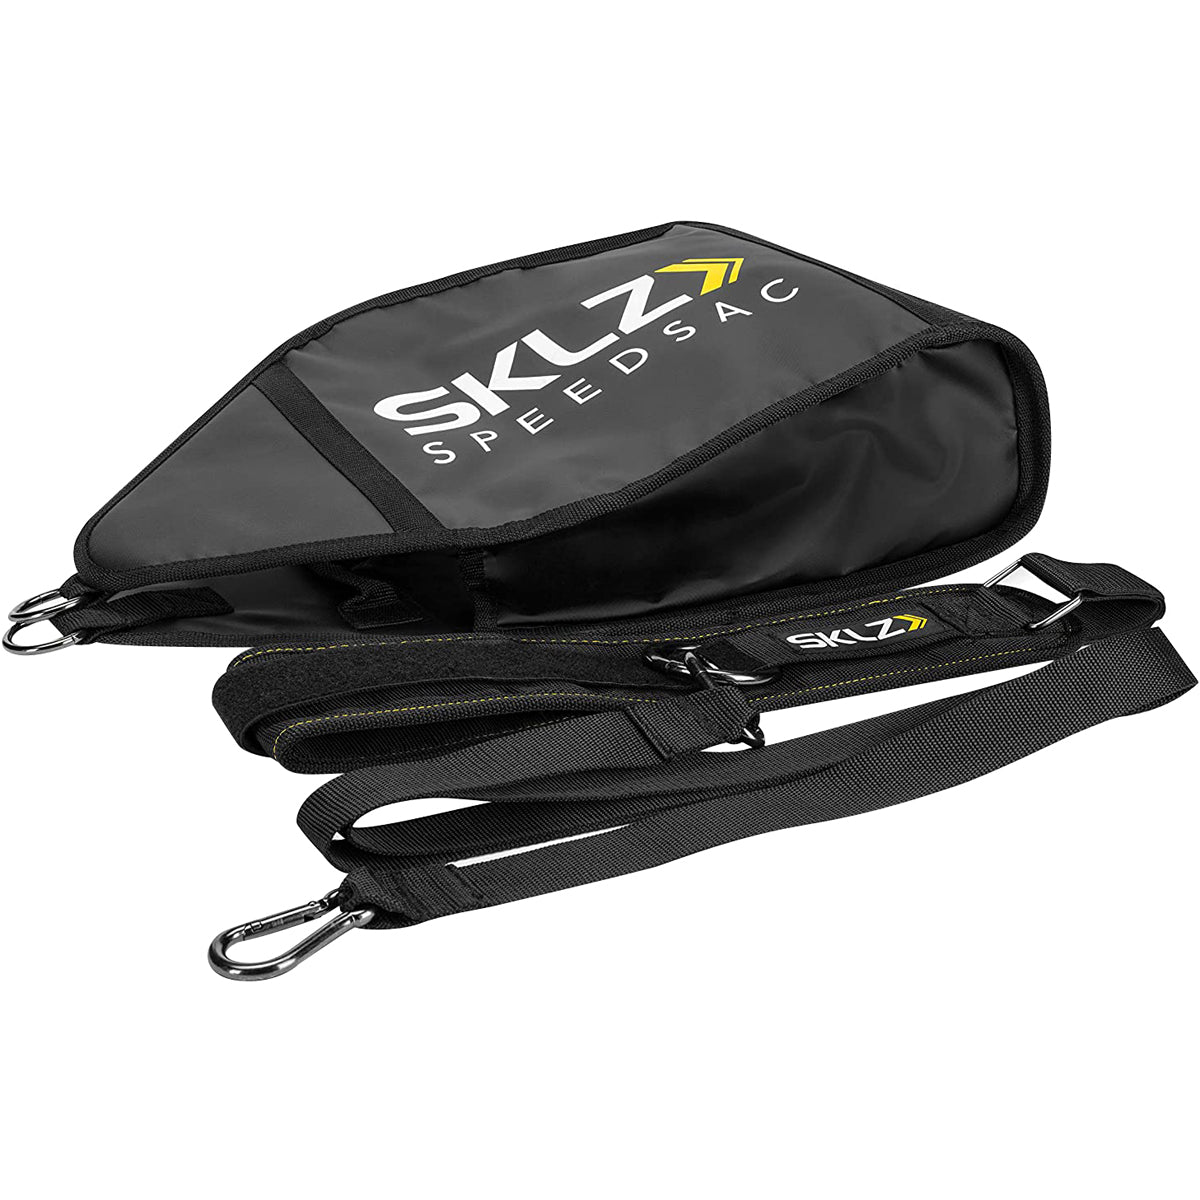 SKLZ SpeedSac Sprint Trainer - Black SKLZ